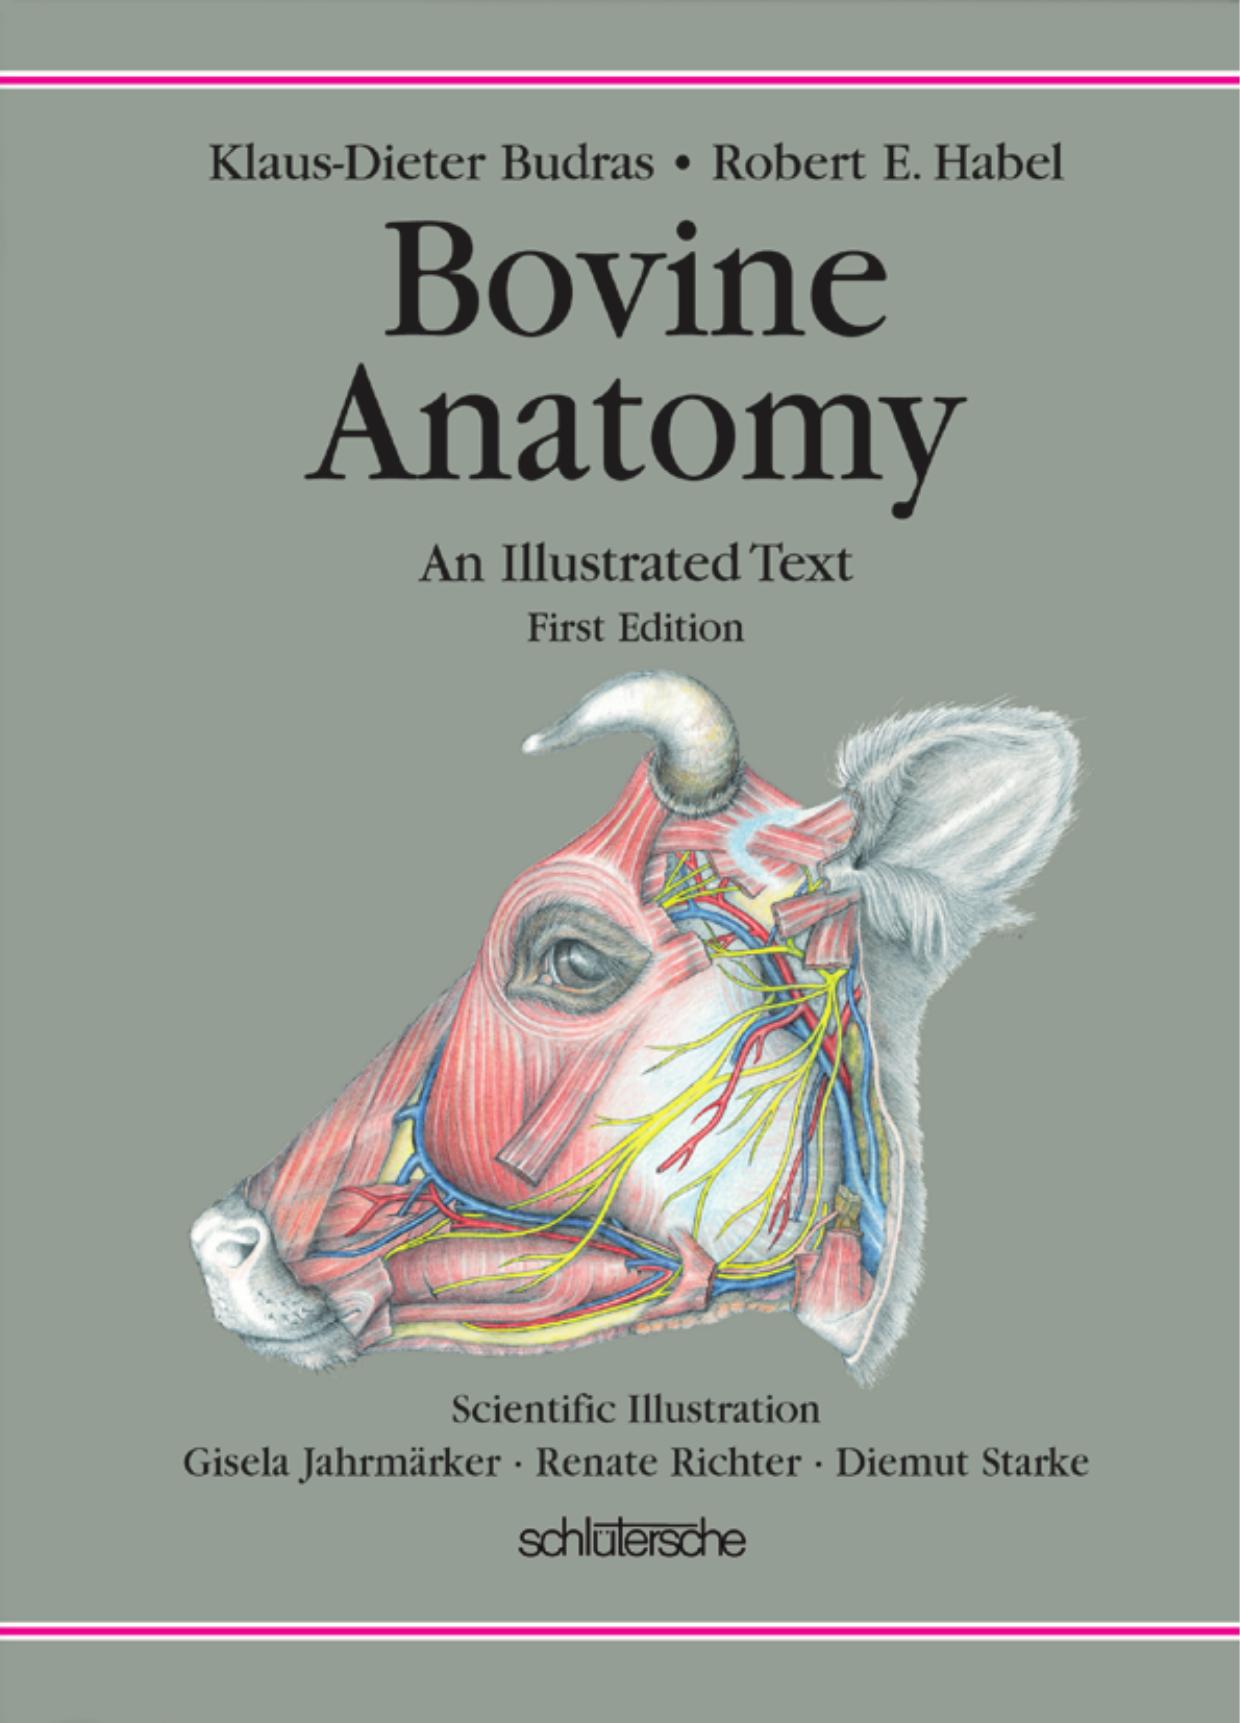 Bovine Anatomy, An Illustrated Text